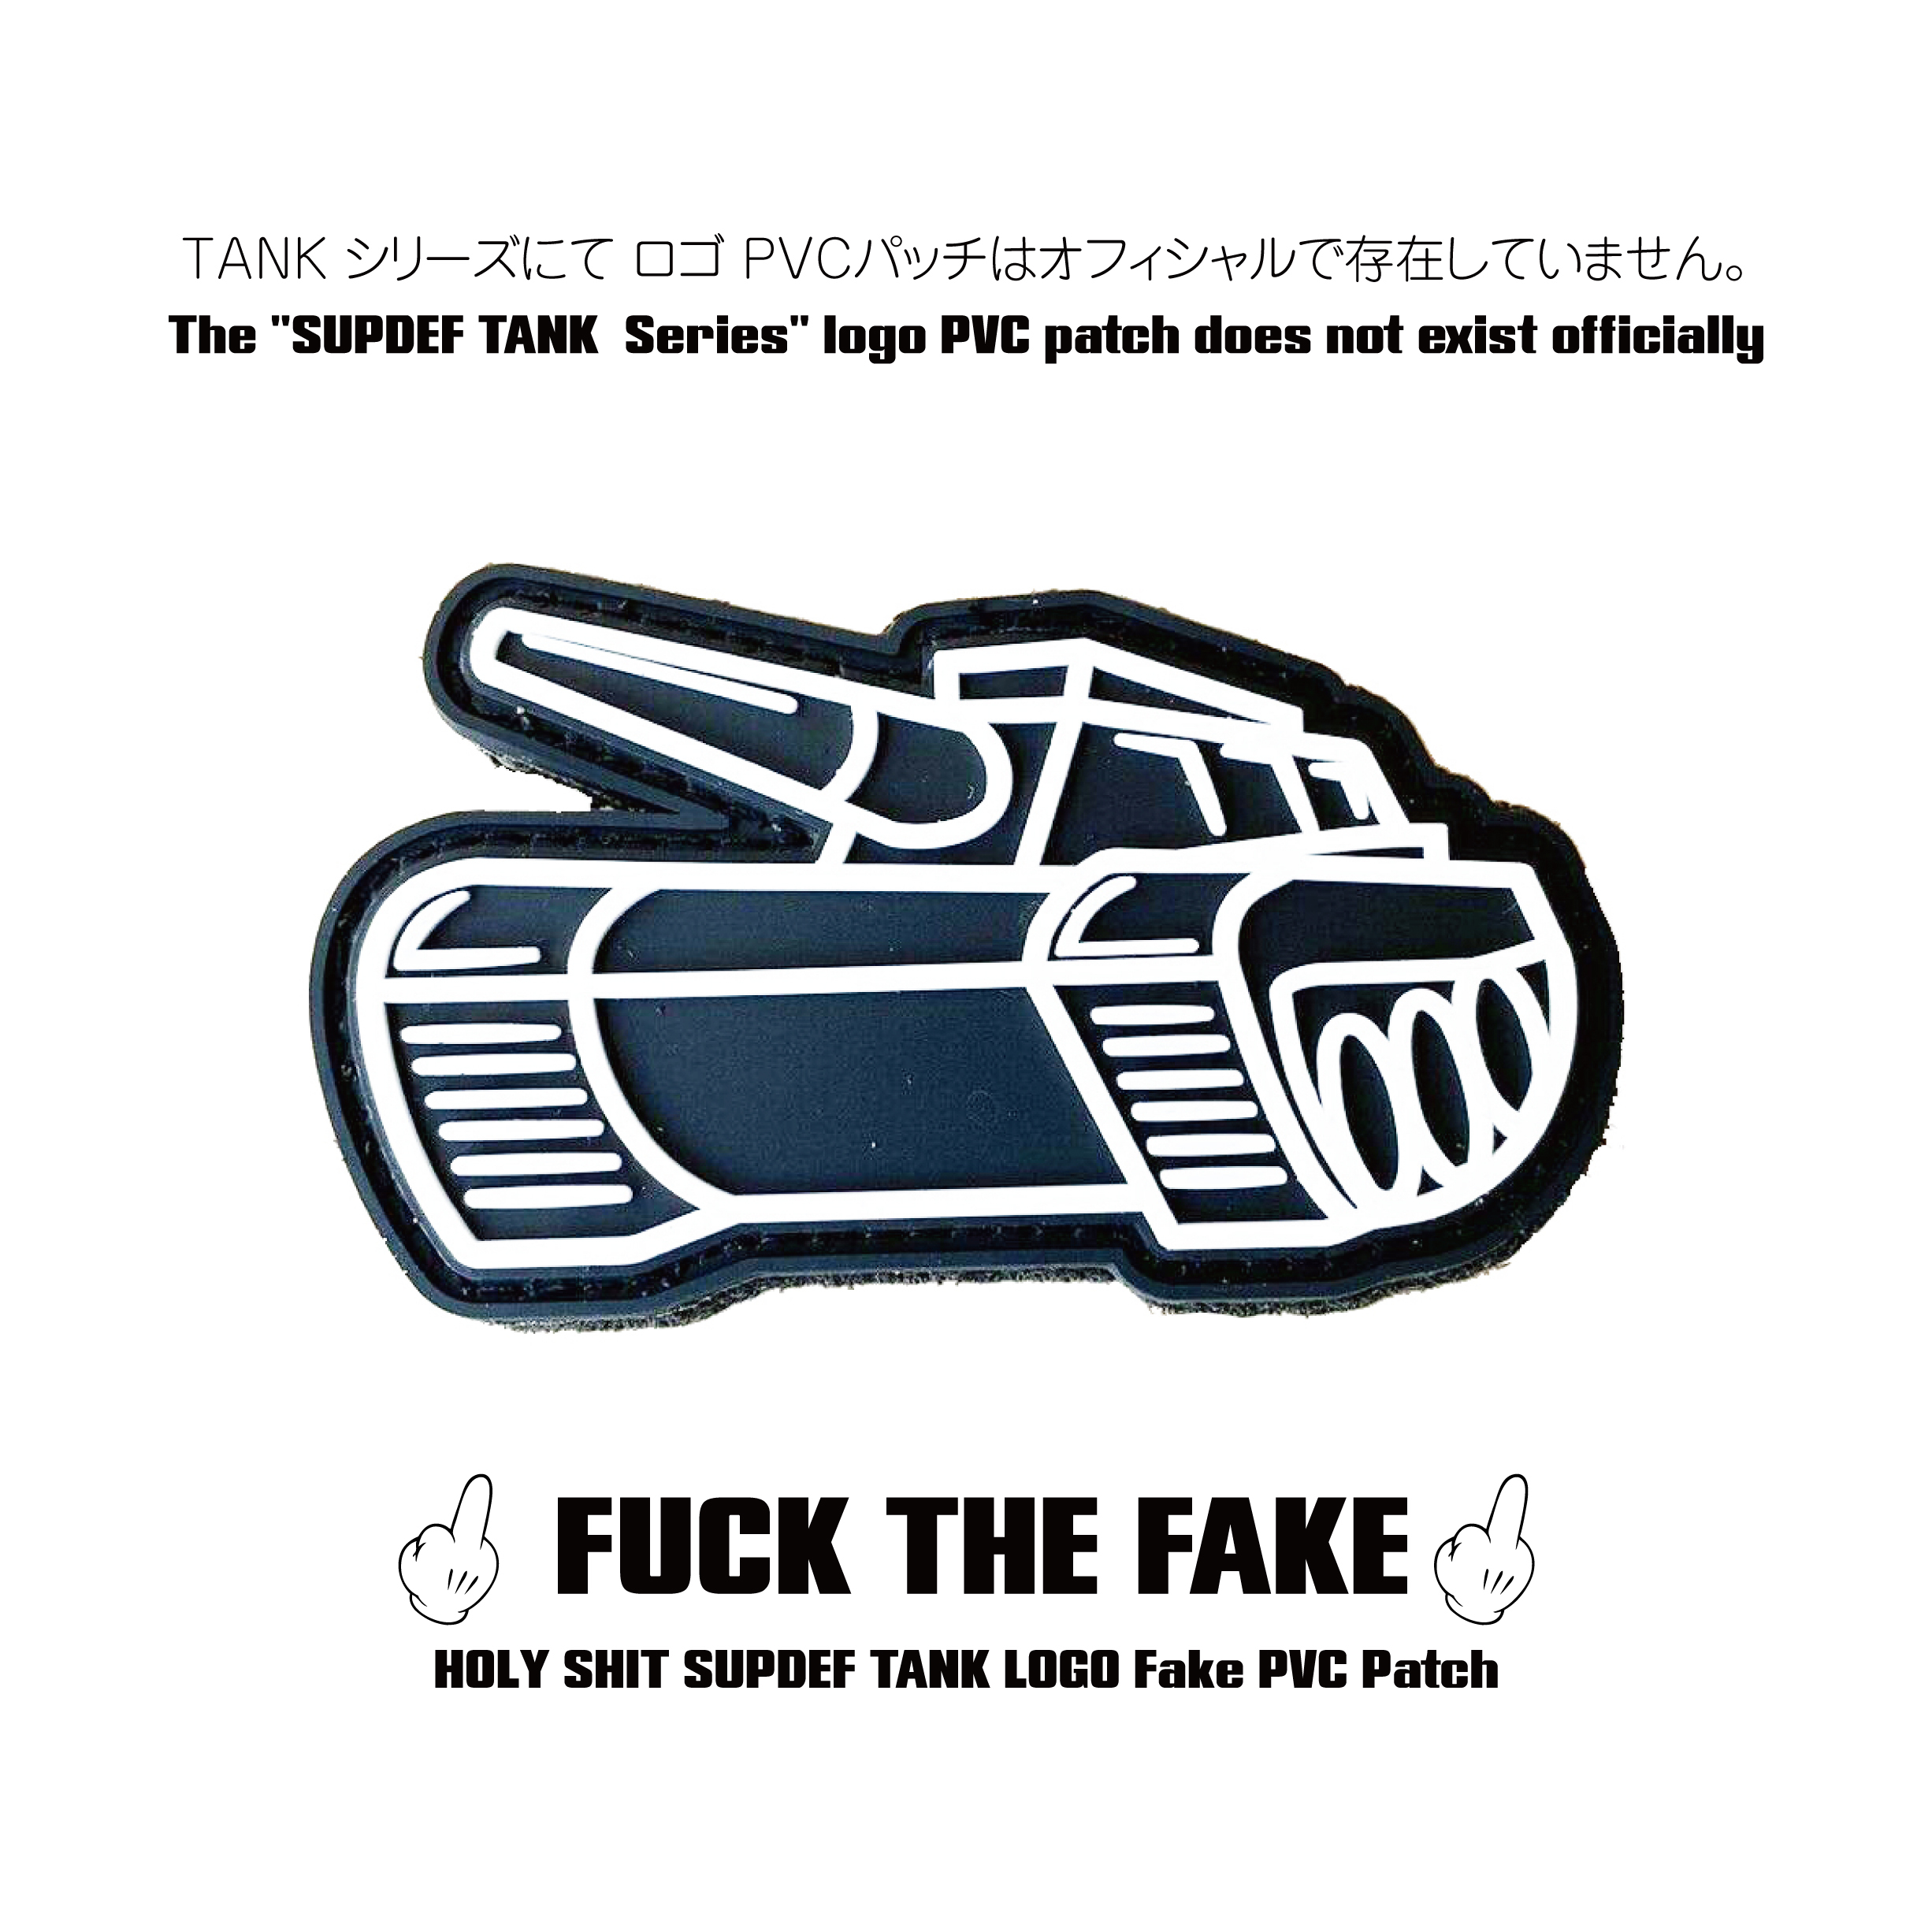 Superior Defense SUPDEF TANK LOGO Fake PVC Patch REAL or FAKE FUCK THE FAKE